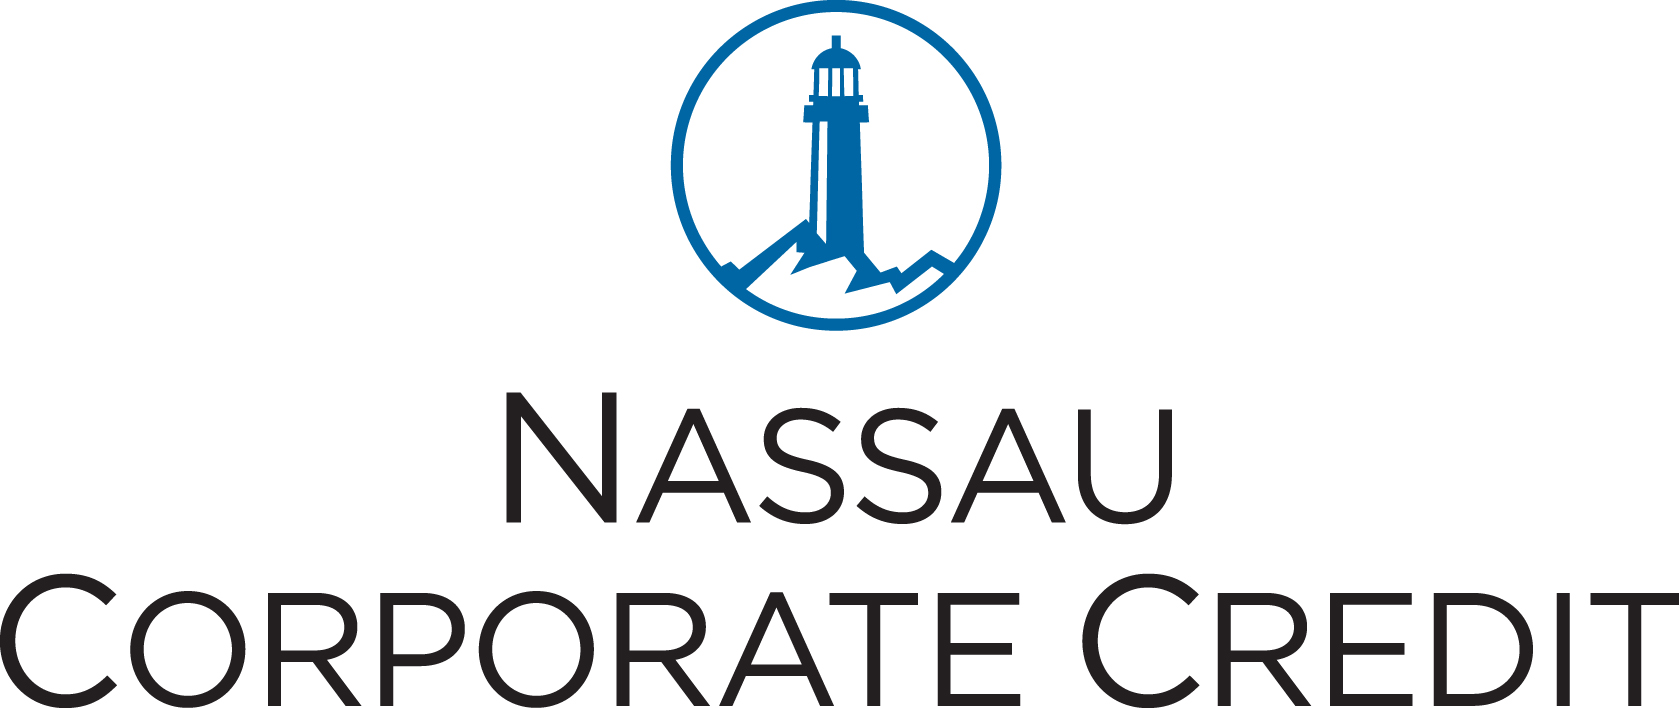 Nassau Corporate Credit Establishing Investment Management Business in London